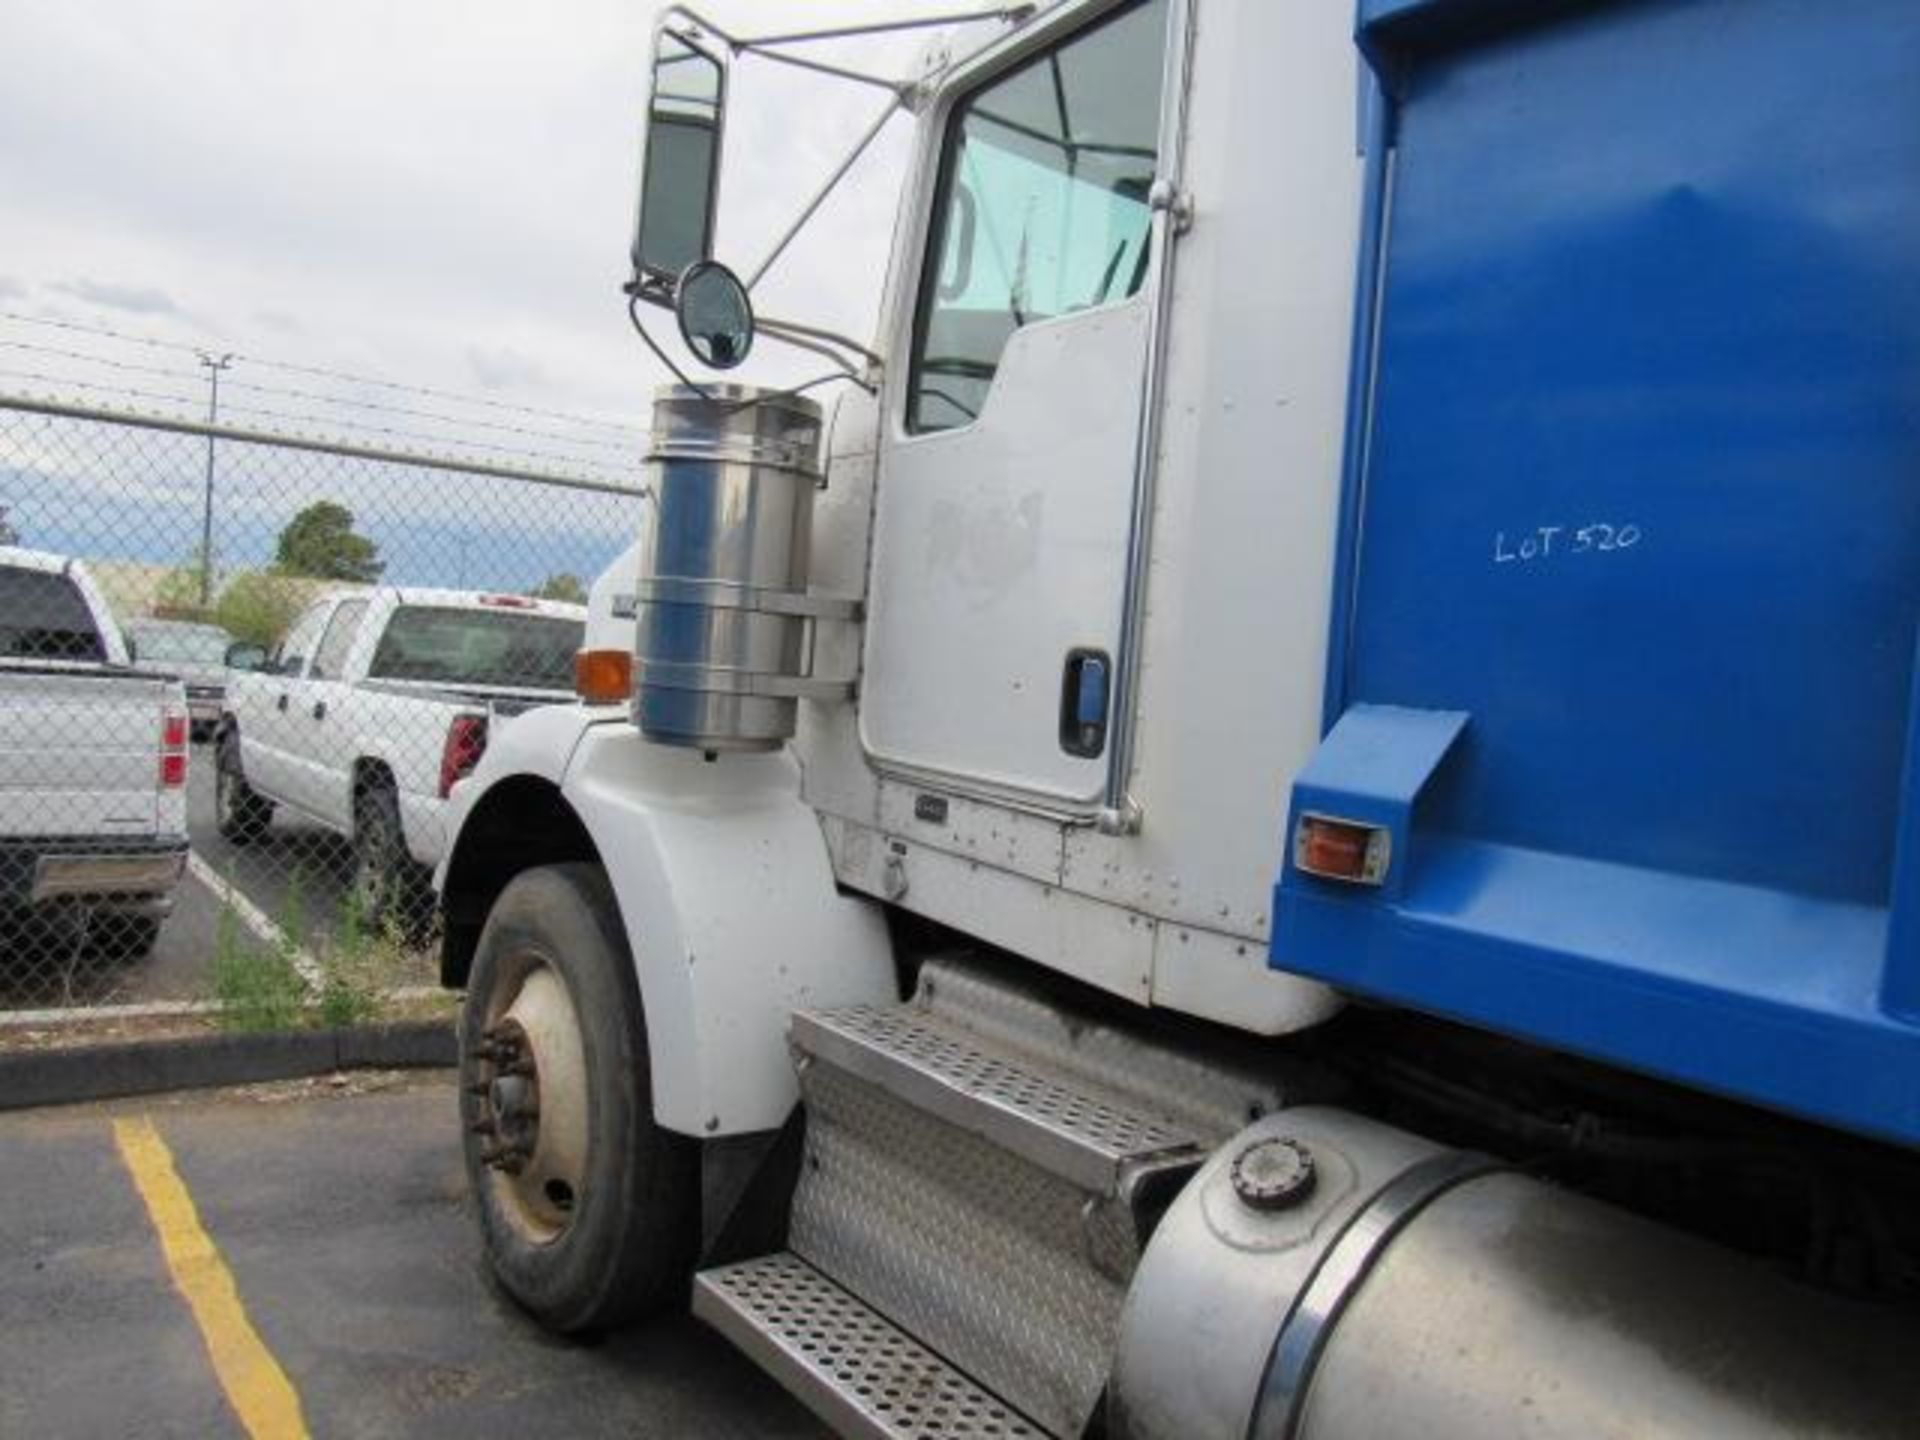 2008 Kenworth T800 Dump Truck, VIN # 1NKDLU9X58J234087, Caterpillar C13 Acert Turbo Diesel Engine, - Image 4 of 8